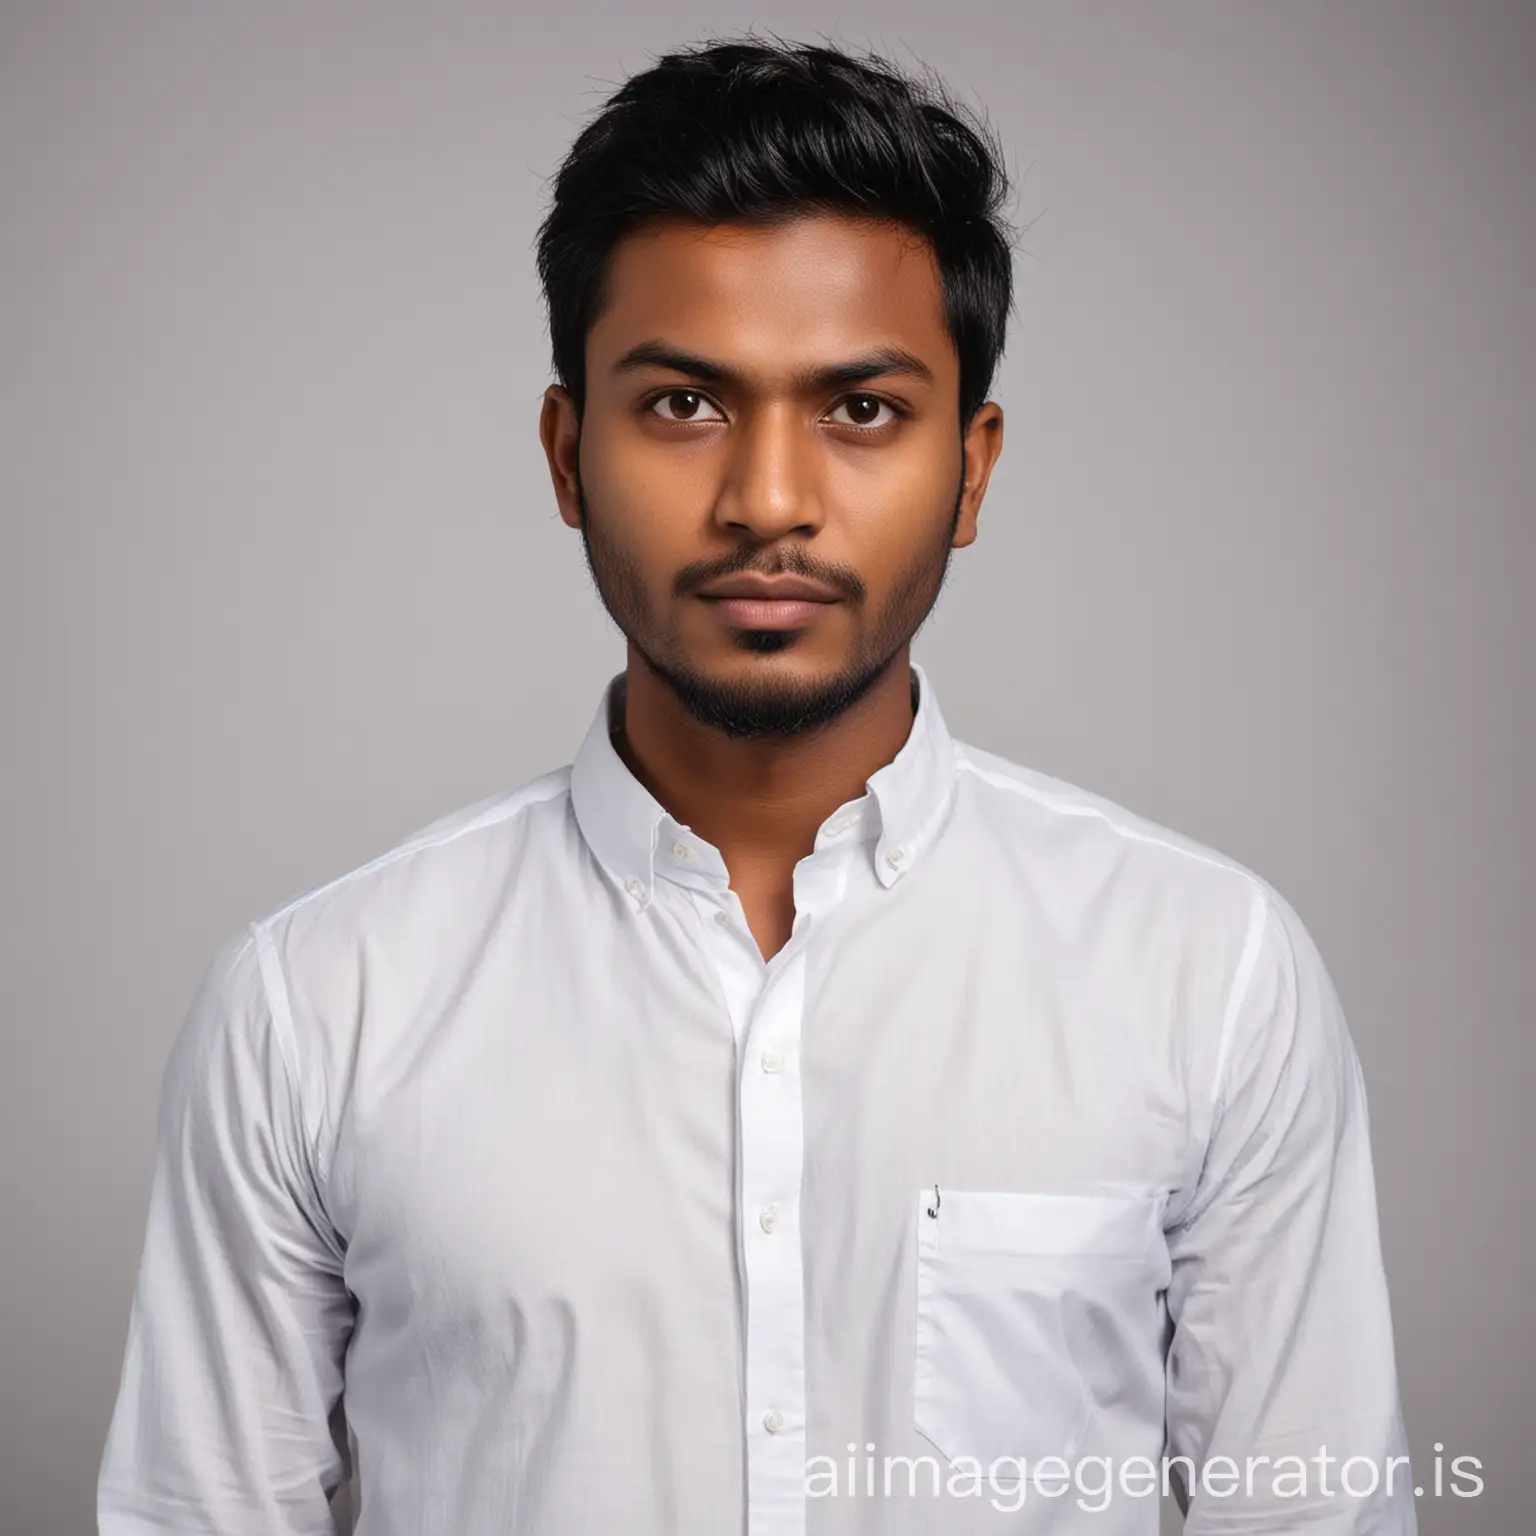 Black skin bangladeshi man, wearing white long sleeve shirt, posing for a passport photo. Head straight looking at the camera. Serious face.